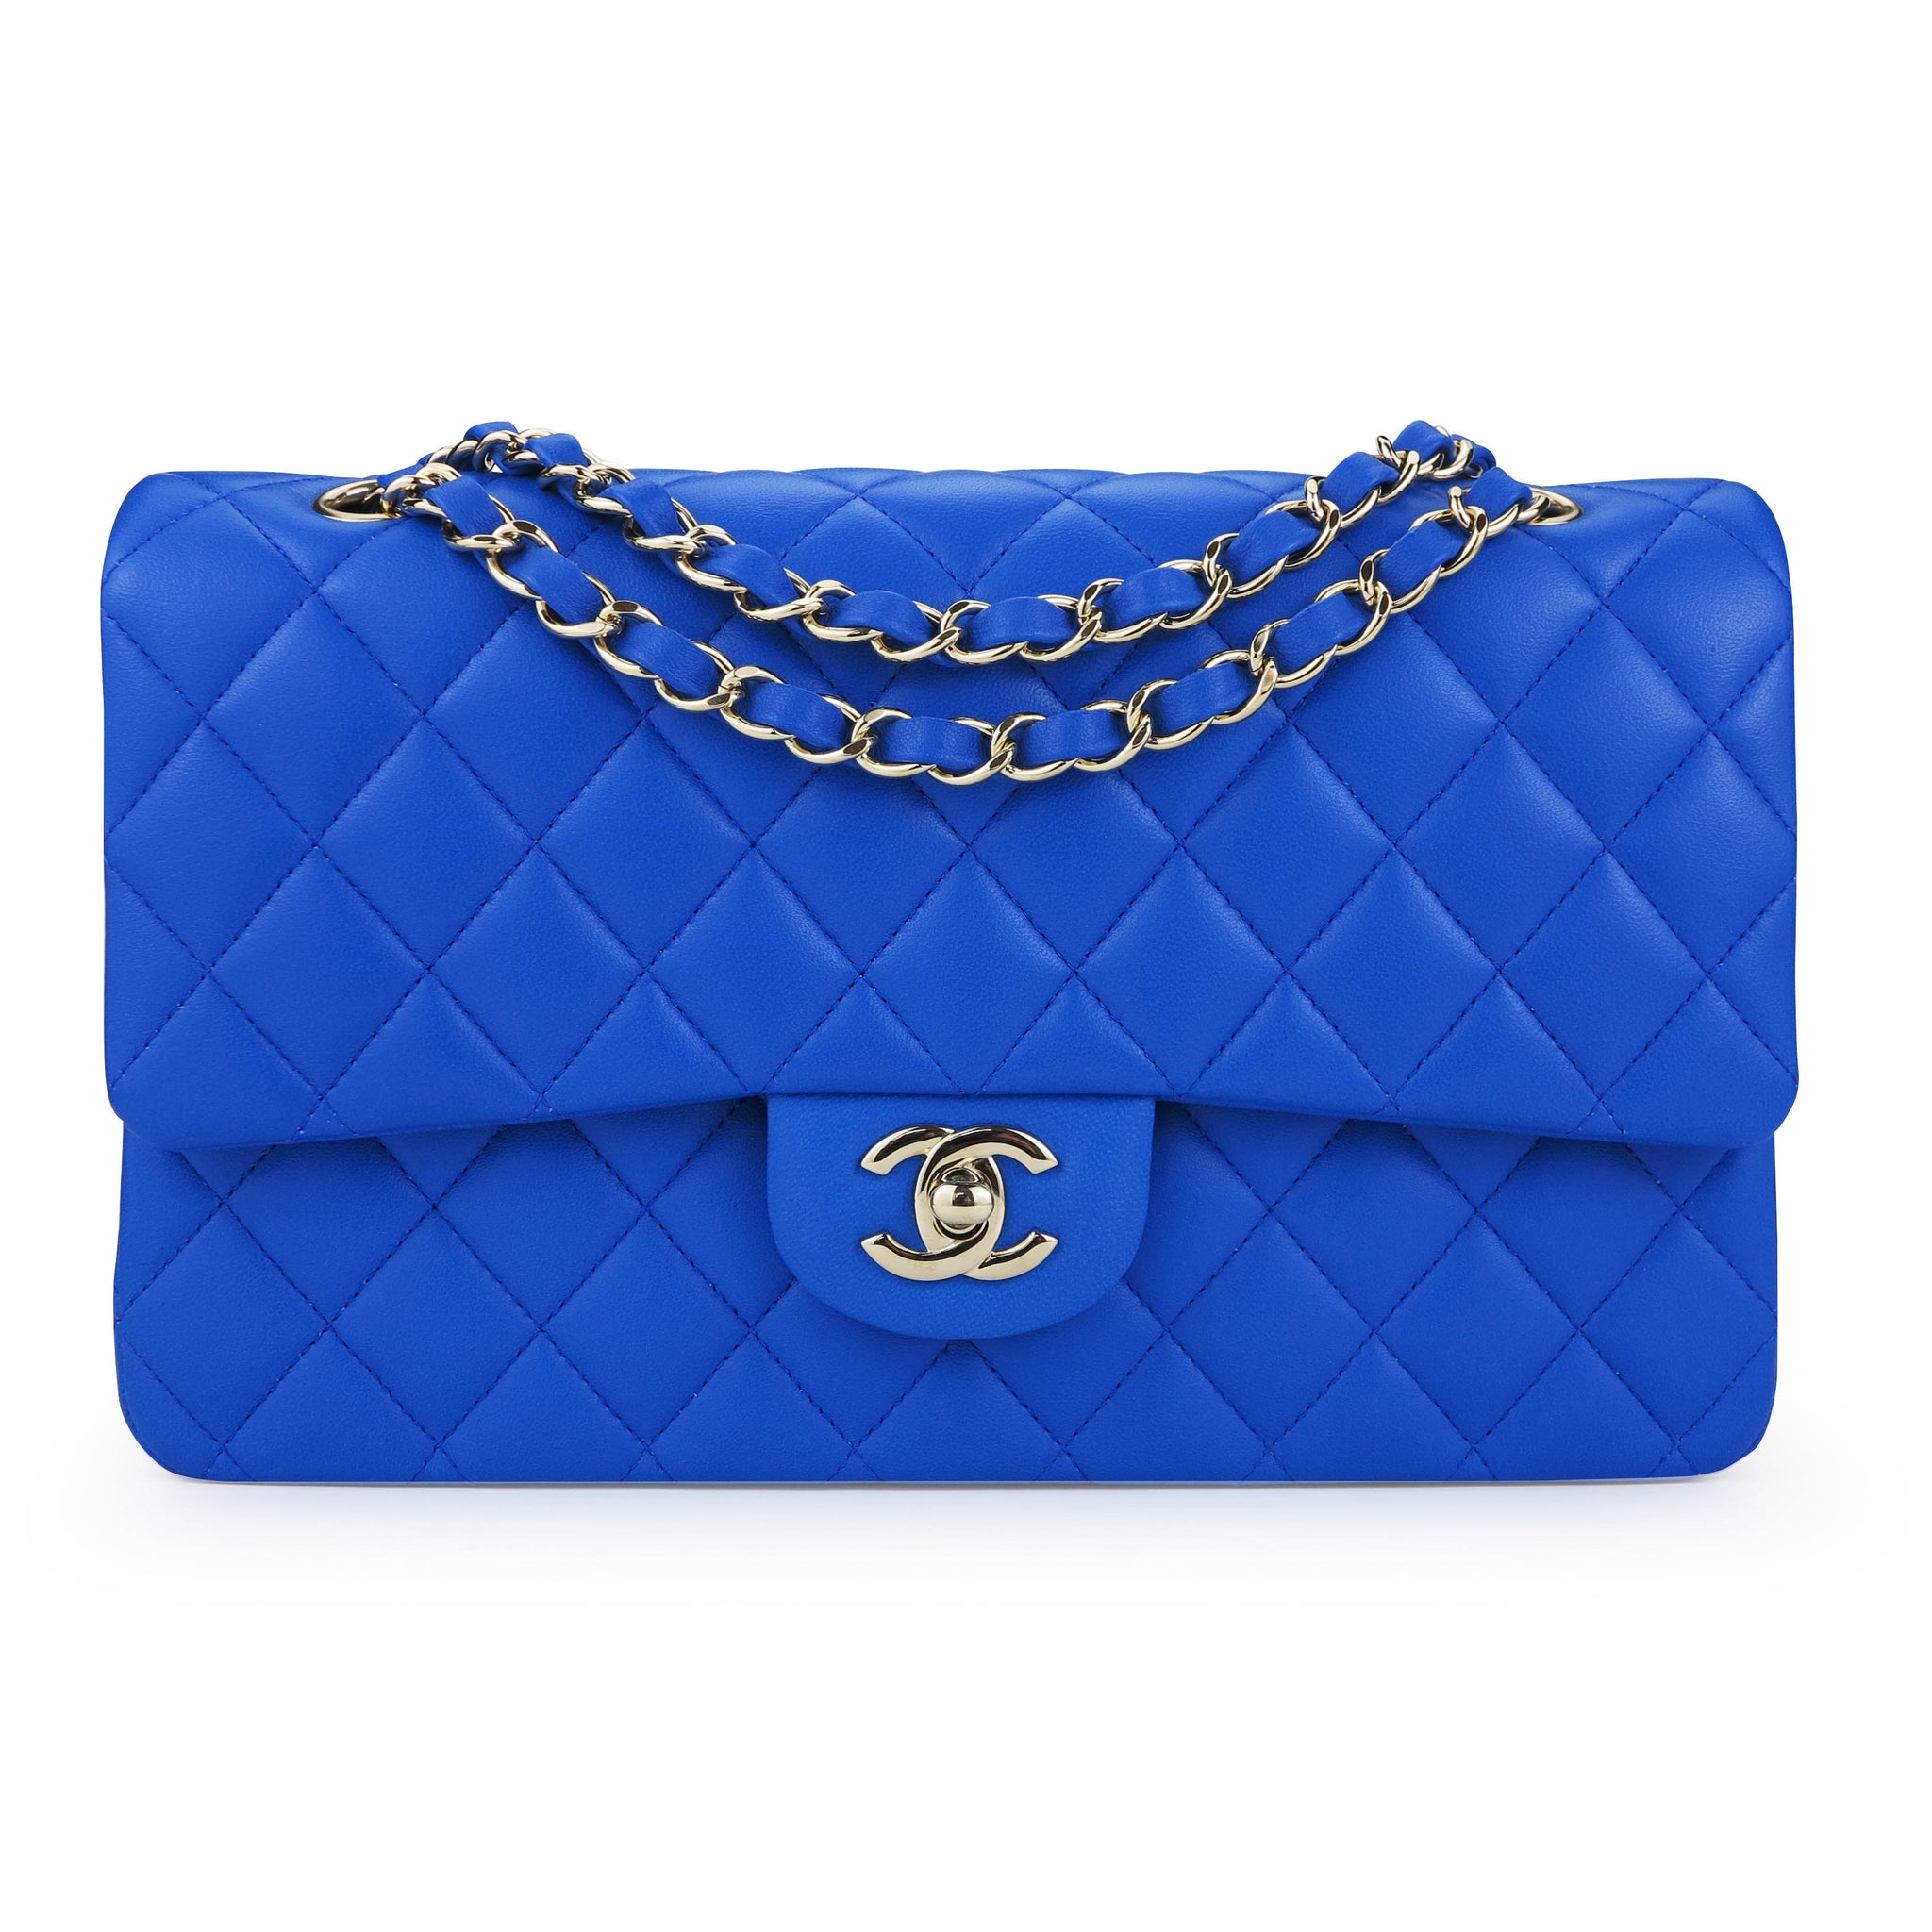 Top 77+ imagen chanel handbags blue